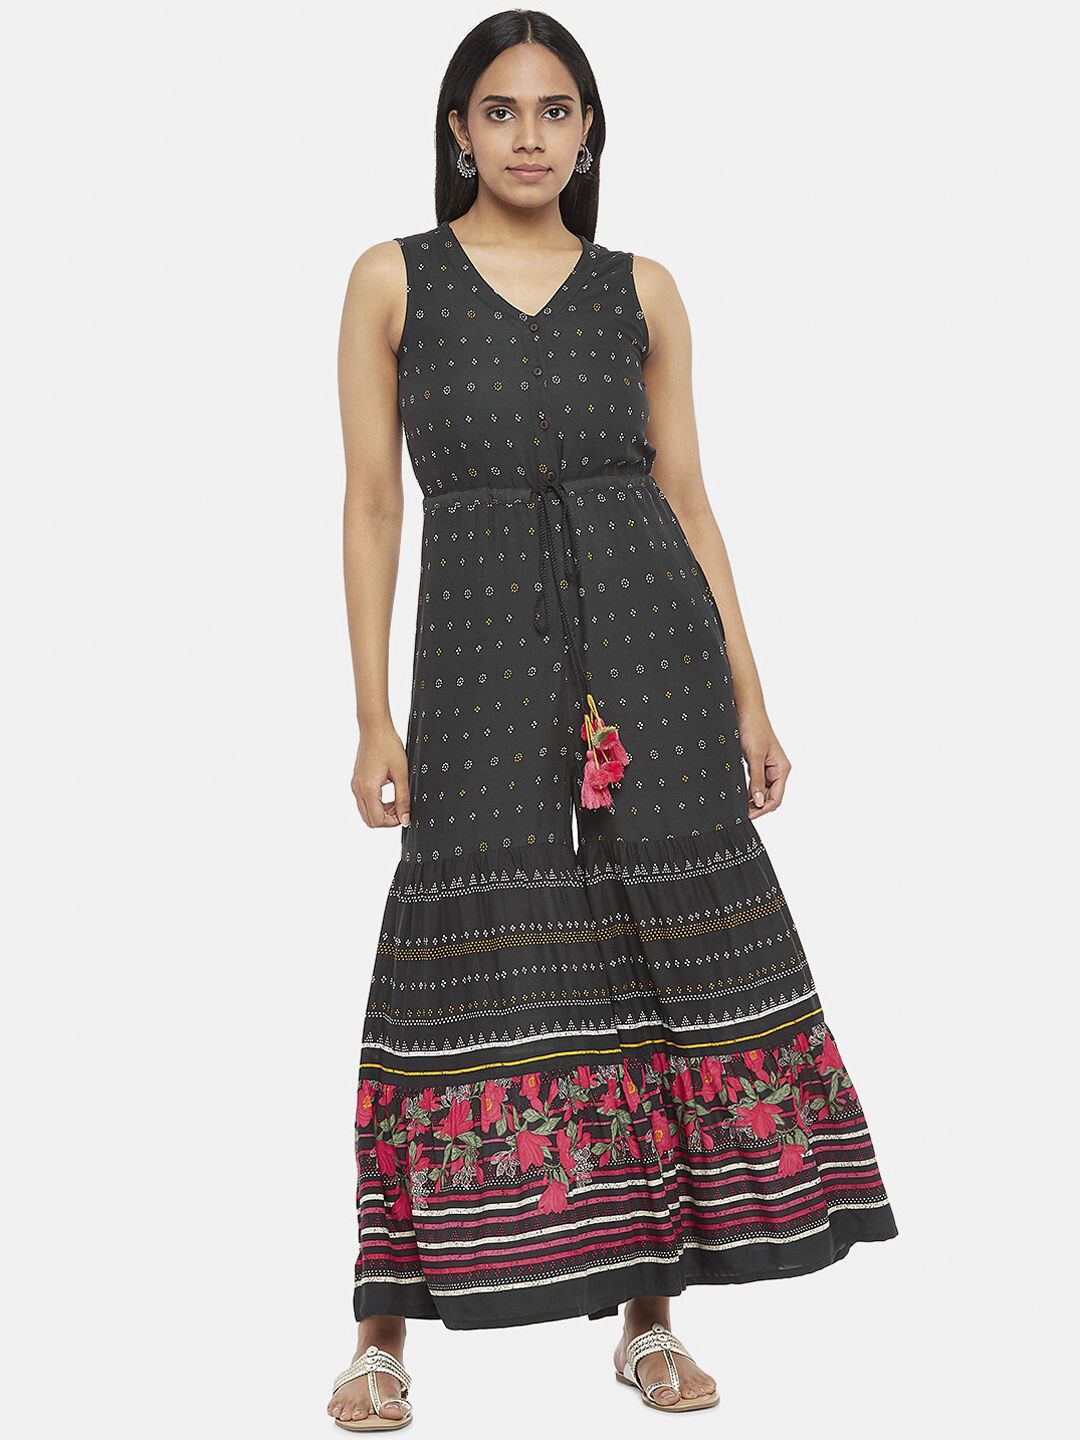 AKKRITI BY PANTALOONS Woman Black Ethnic Motifs Maxi Dress Price in India